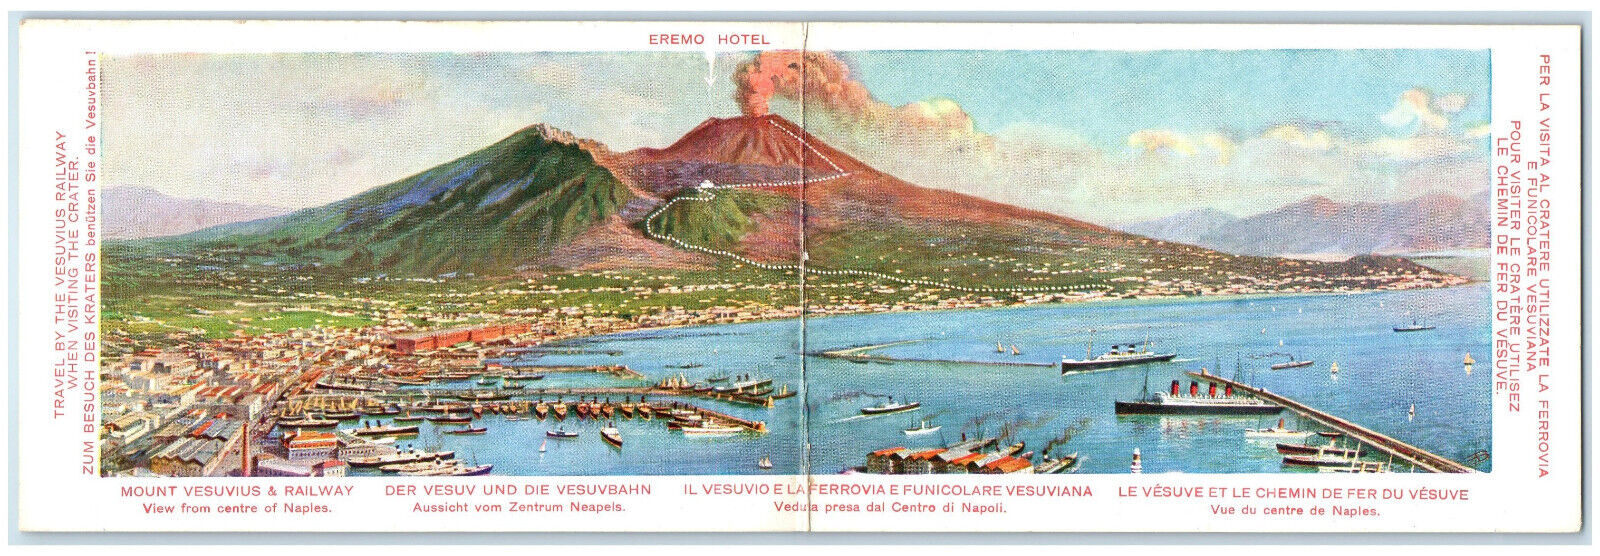 c1920's Eremo Hotel Mount Vesuvius & Railway Italy Panorama Fold Out Postcard